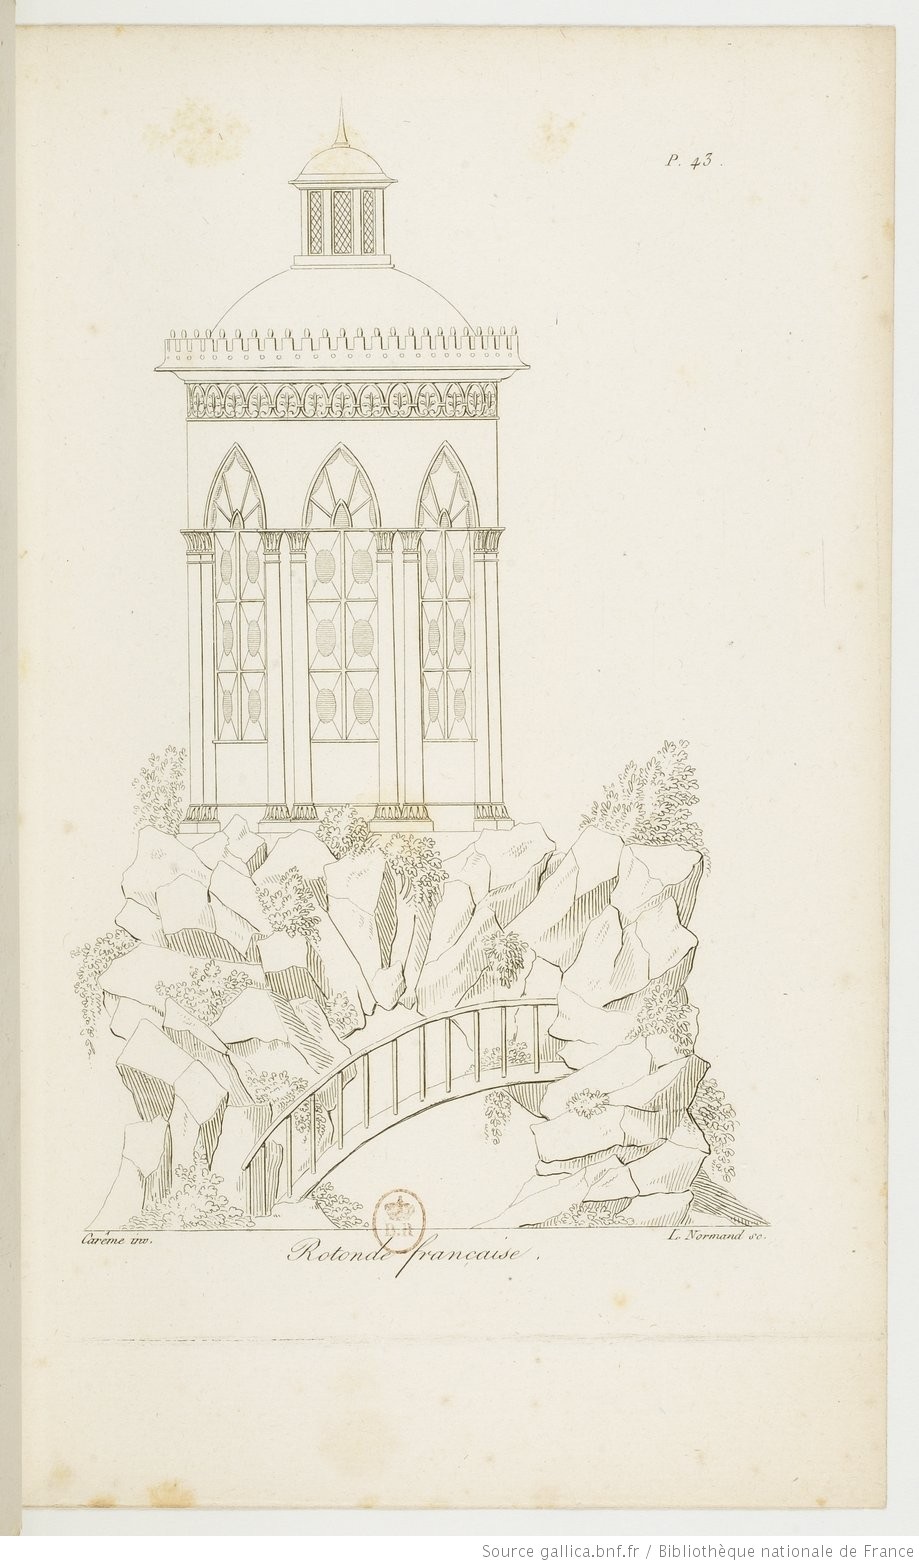 Carême 早年在法國皇家圖書館研究建築構造與細節，並據以創造出無數令人驚嘆的甜點裝置藝術作品。他曾出版《Le Pâtissier pittoresque》一書（1815, impr. de F.